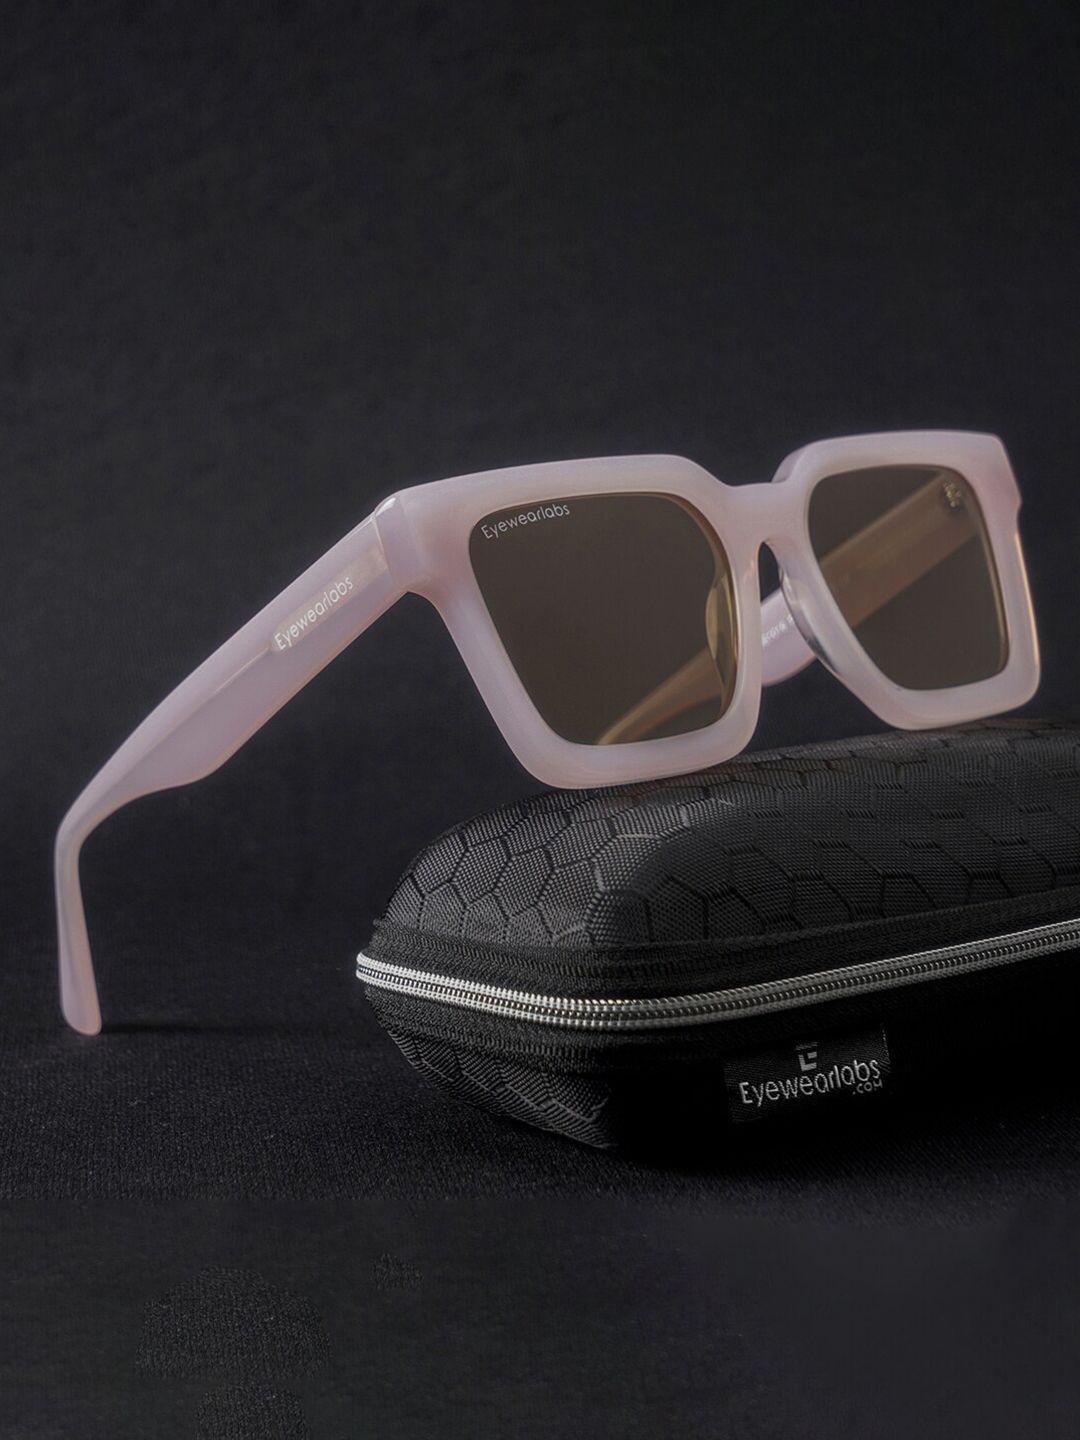 eyewearlabs women lens & oversized sunglasses with uv protected lens cbrookepksc4el1174